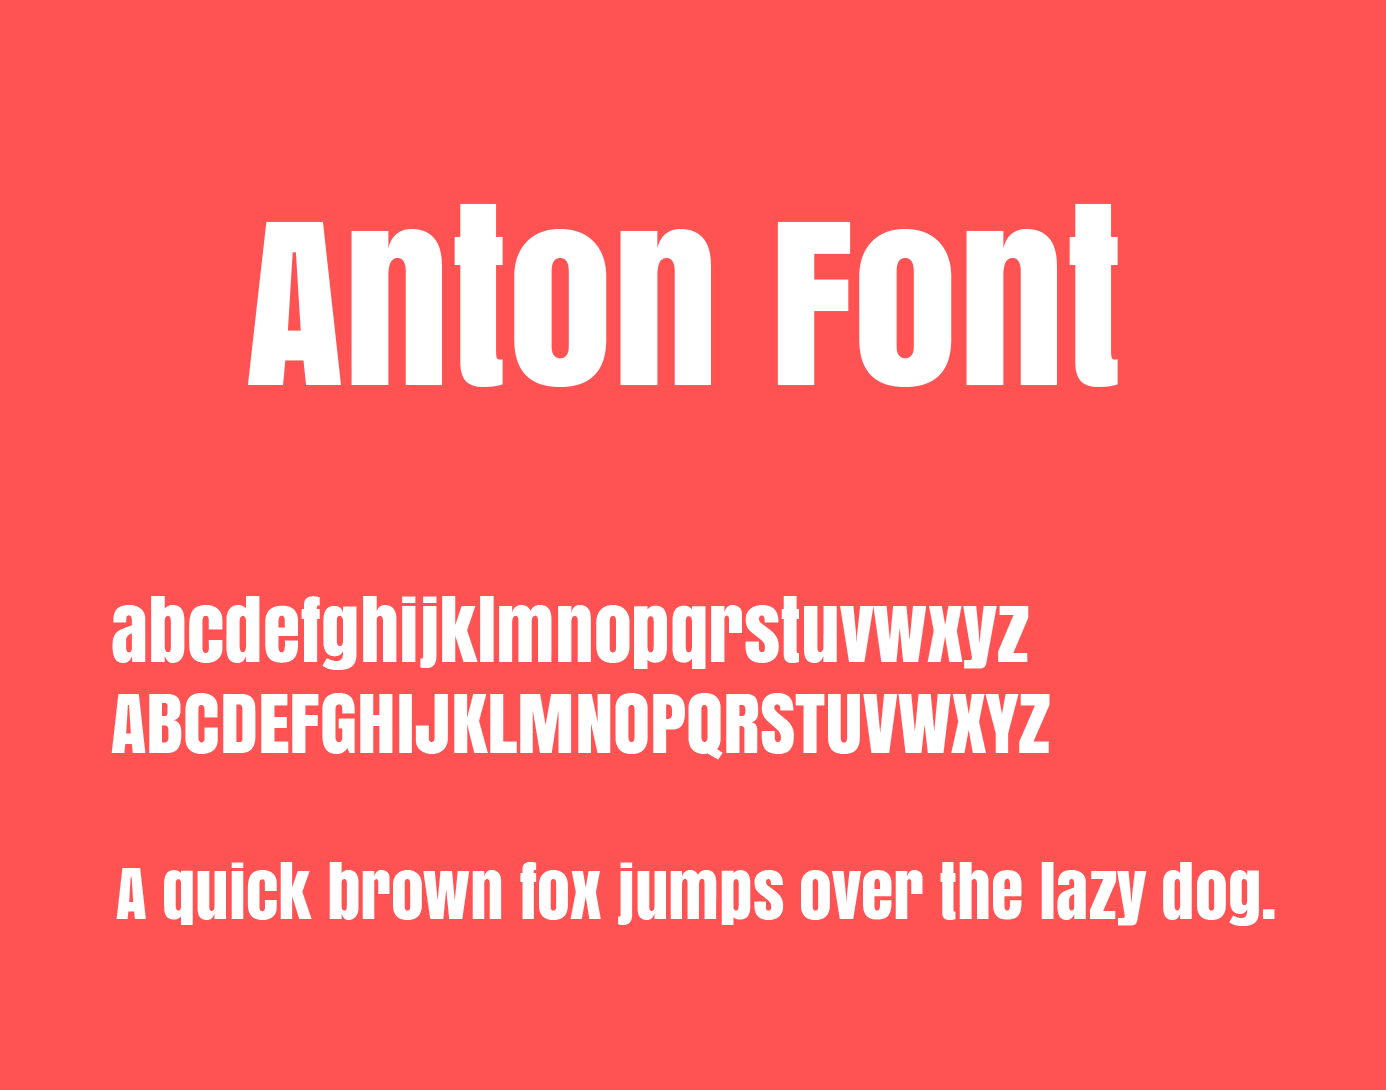 Font Anton